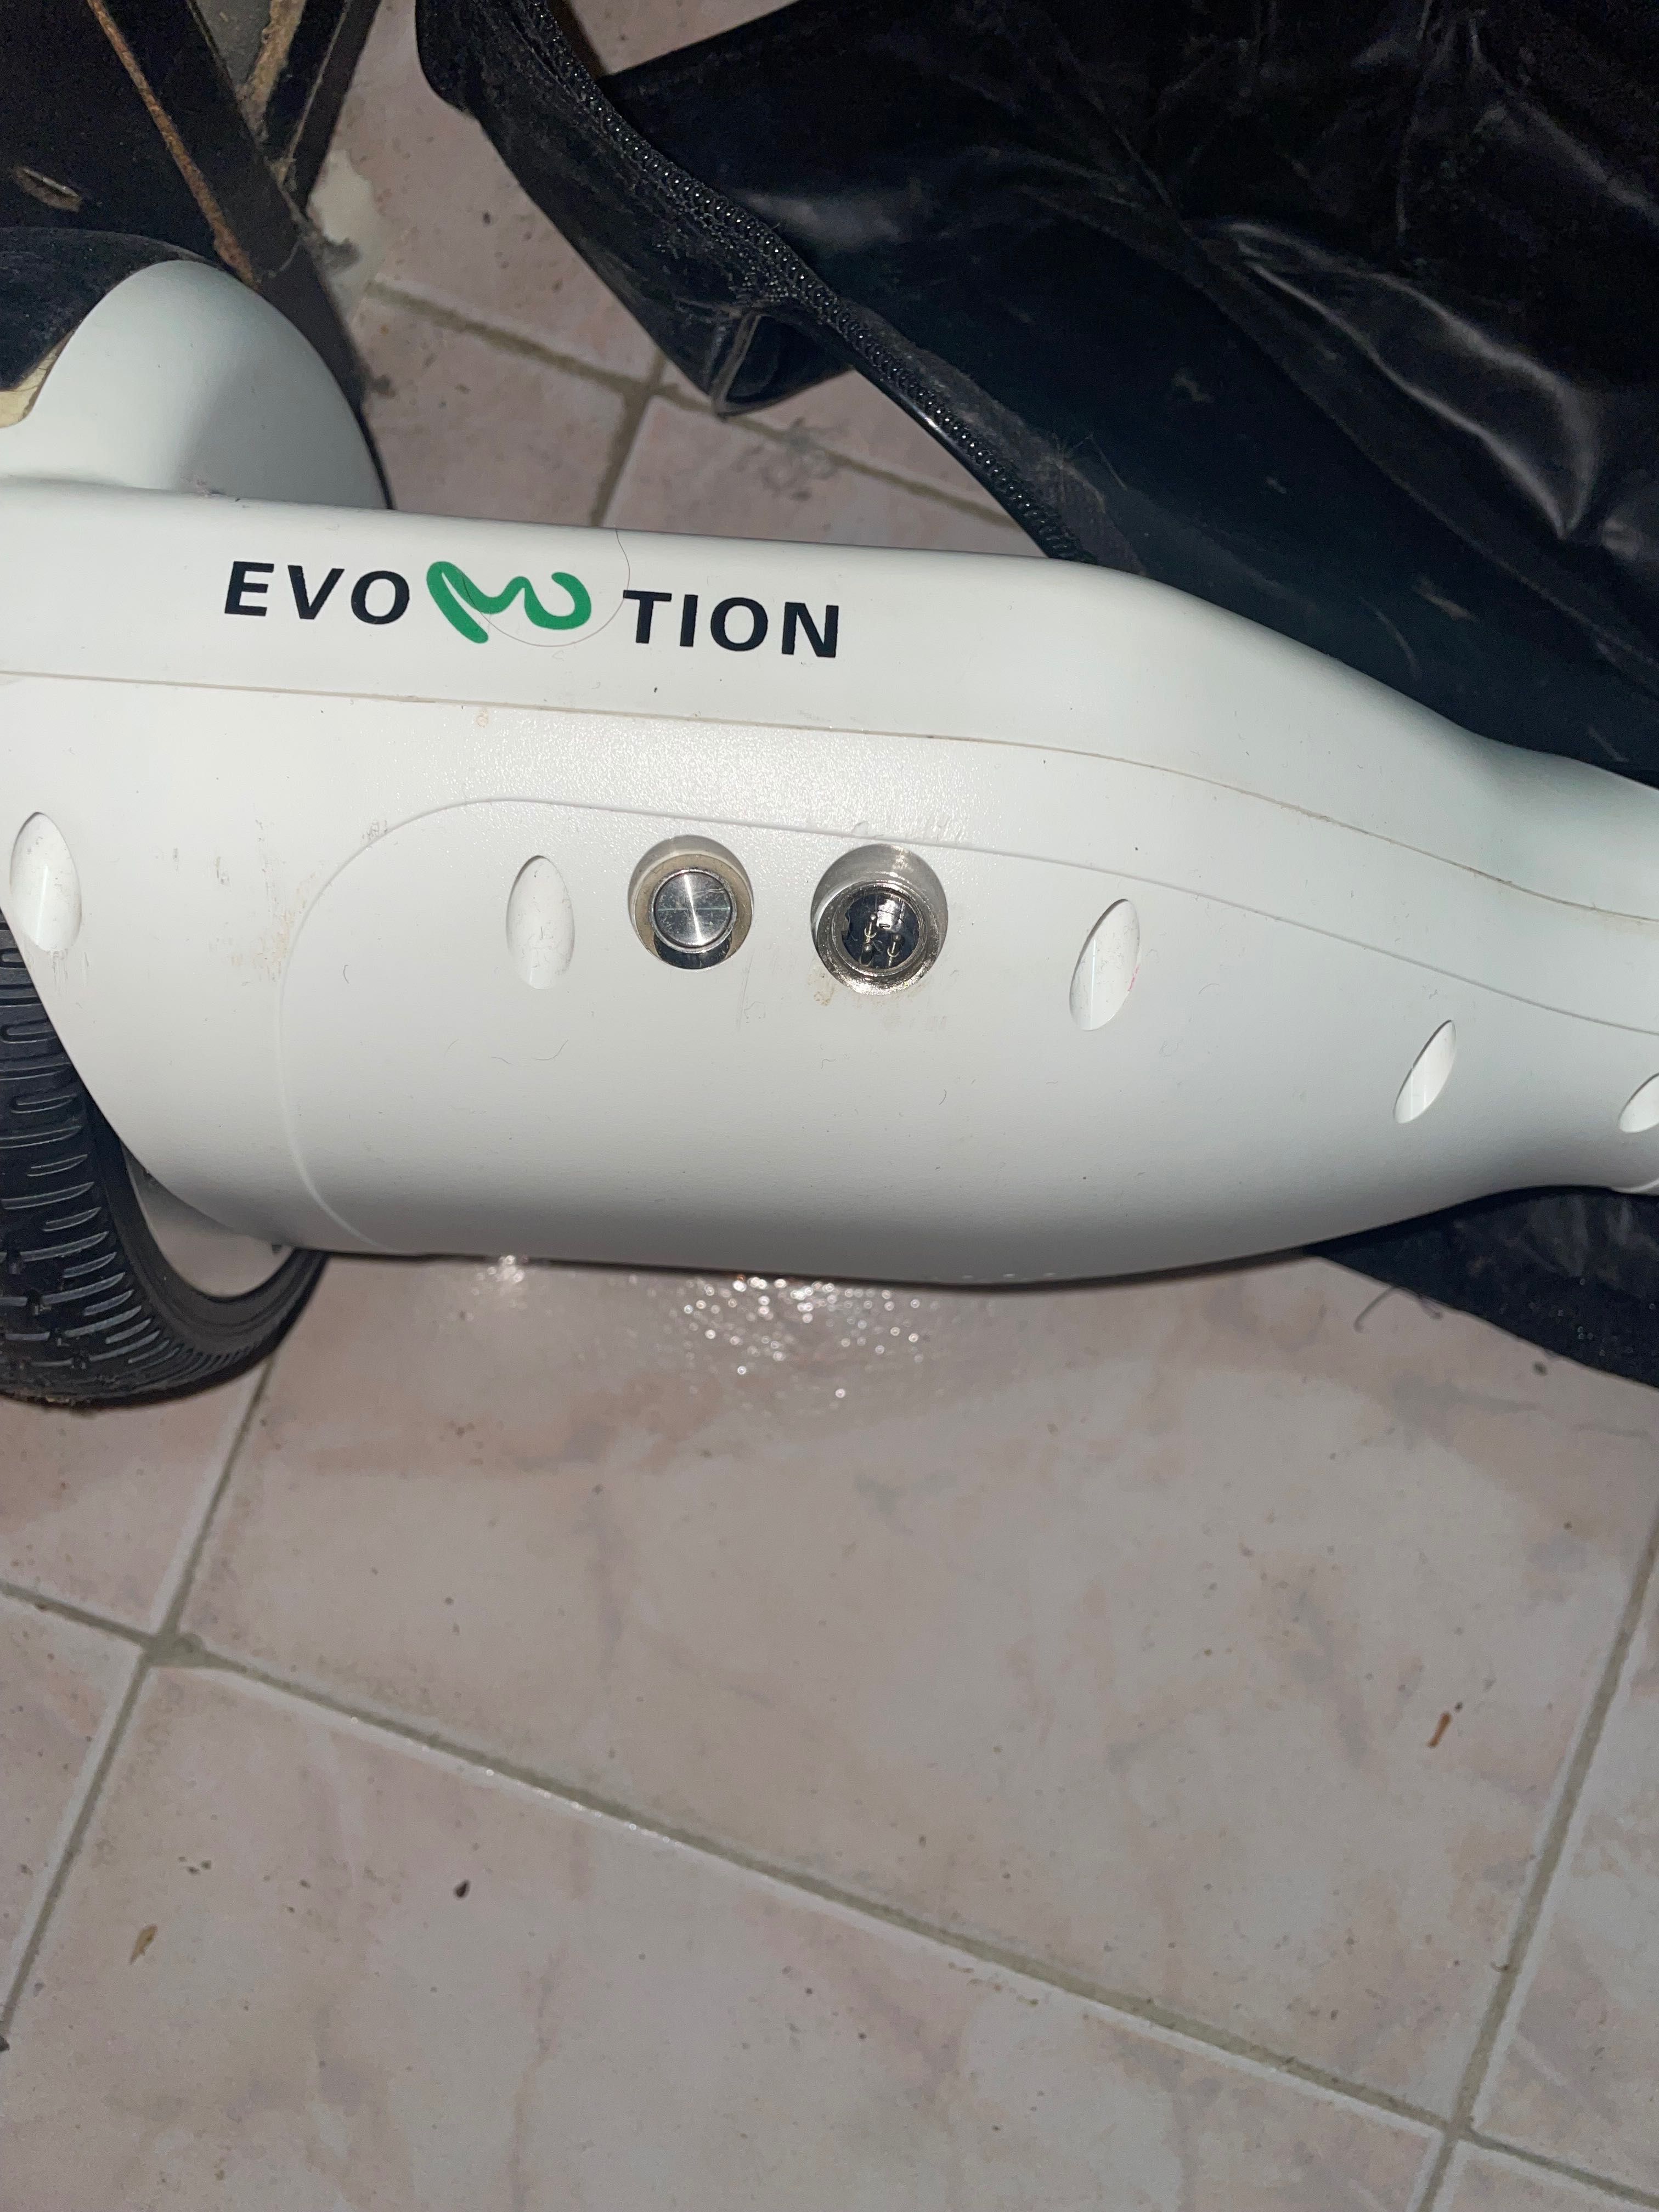 Hoverboard “Evolution” com pasta